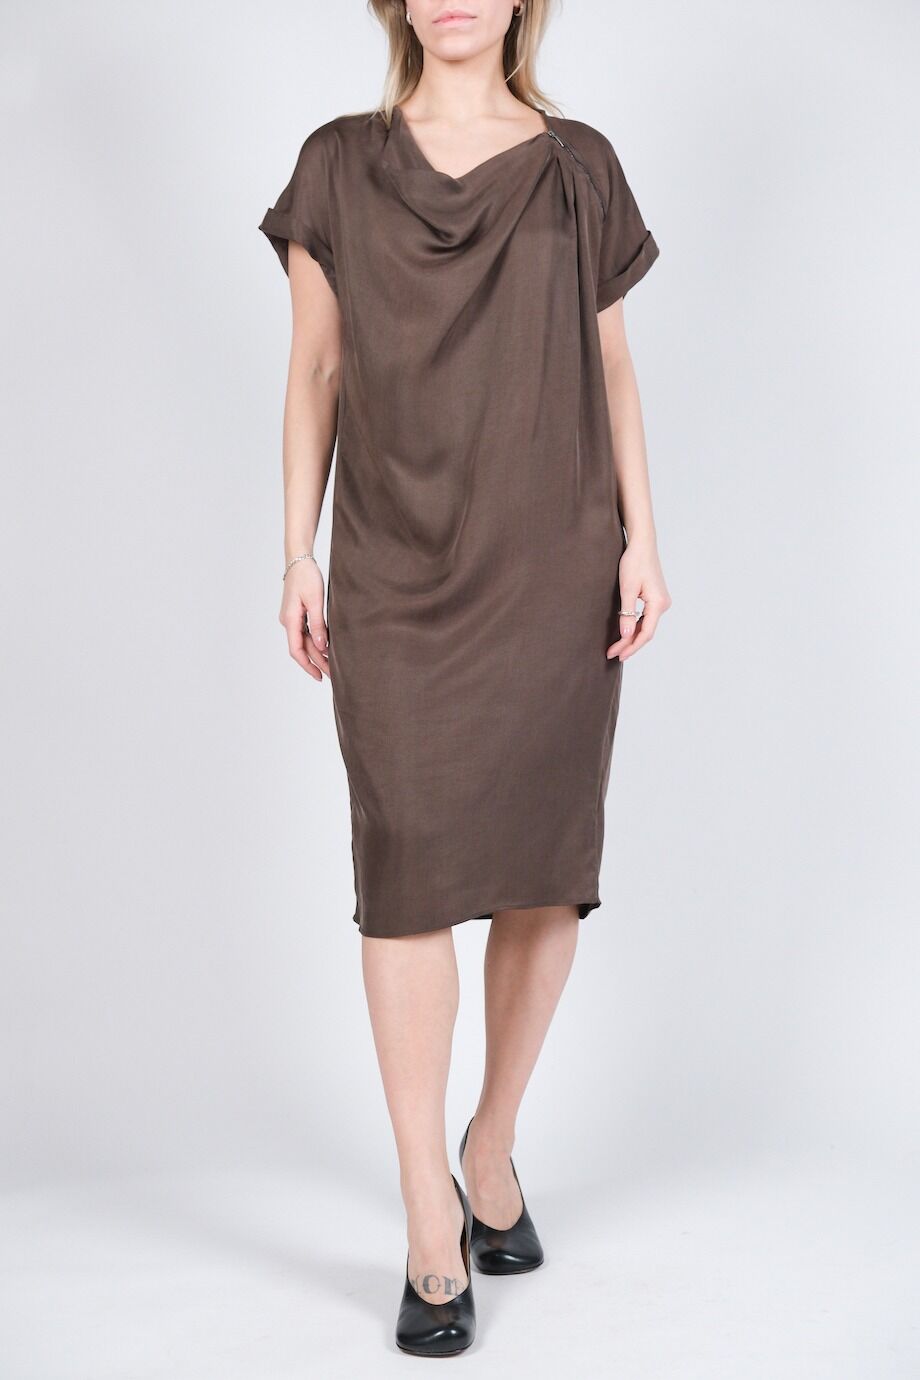 image 1 Платье кофейного цвета с молнией на плече